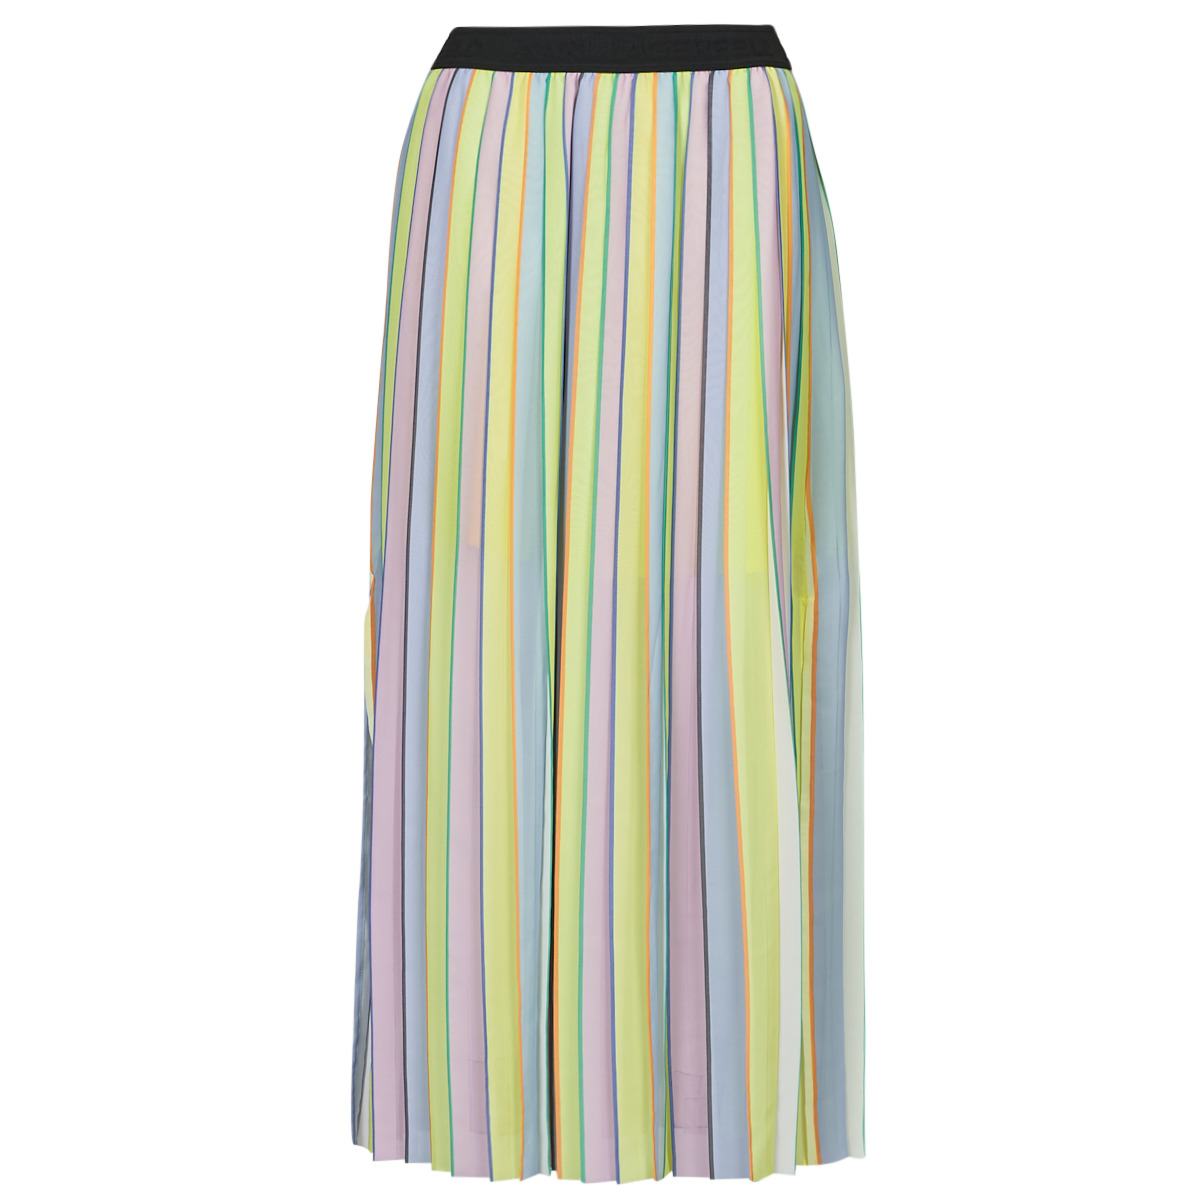 Kleidung Damen Röcke Karl Lagerfeld stripe pleated skirt Bunt